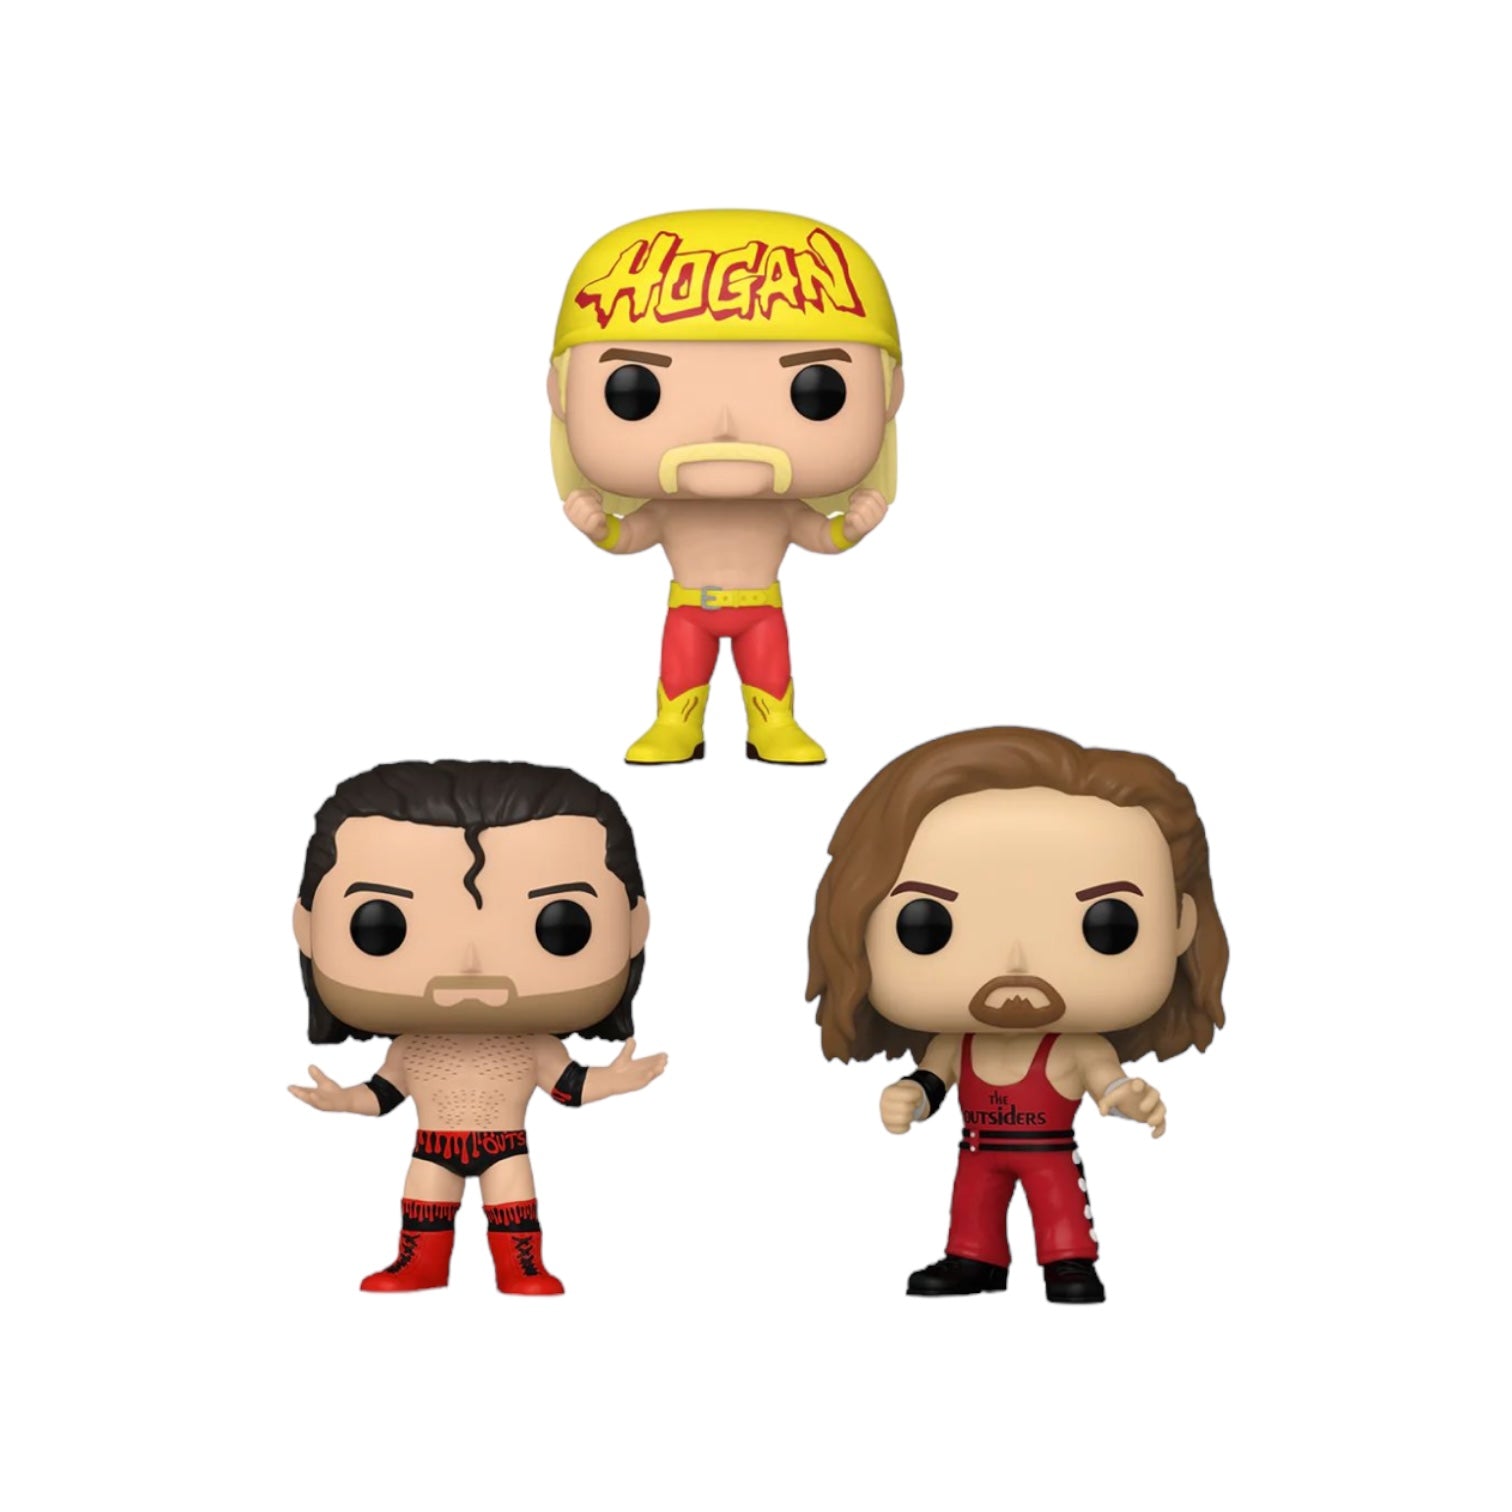 (NWO) Hogan & The Outsiders Funko Pop! 3 Pack WWE - PREORDER